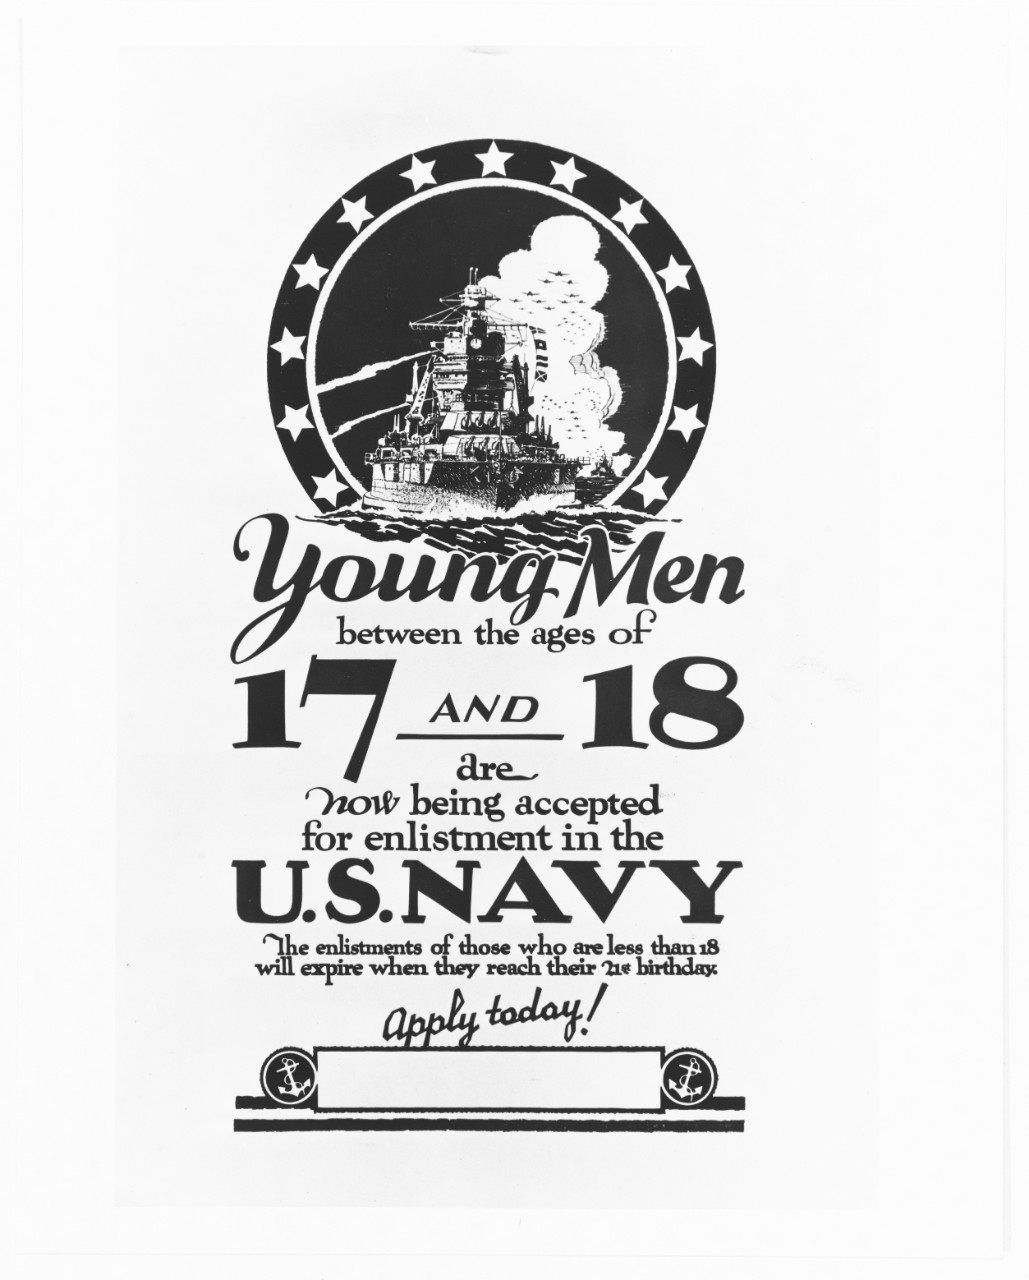 Navy poster, "Young Men"